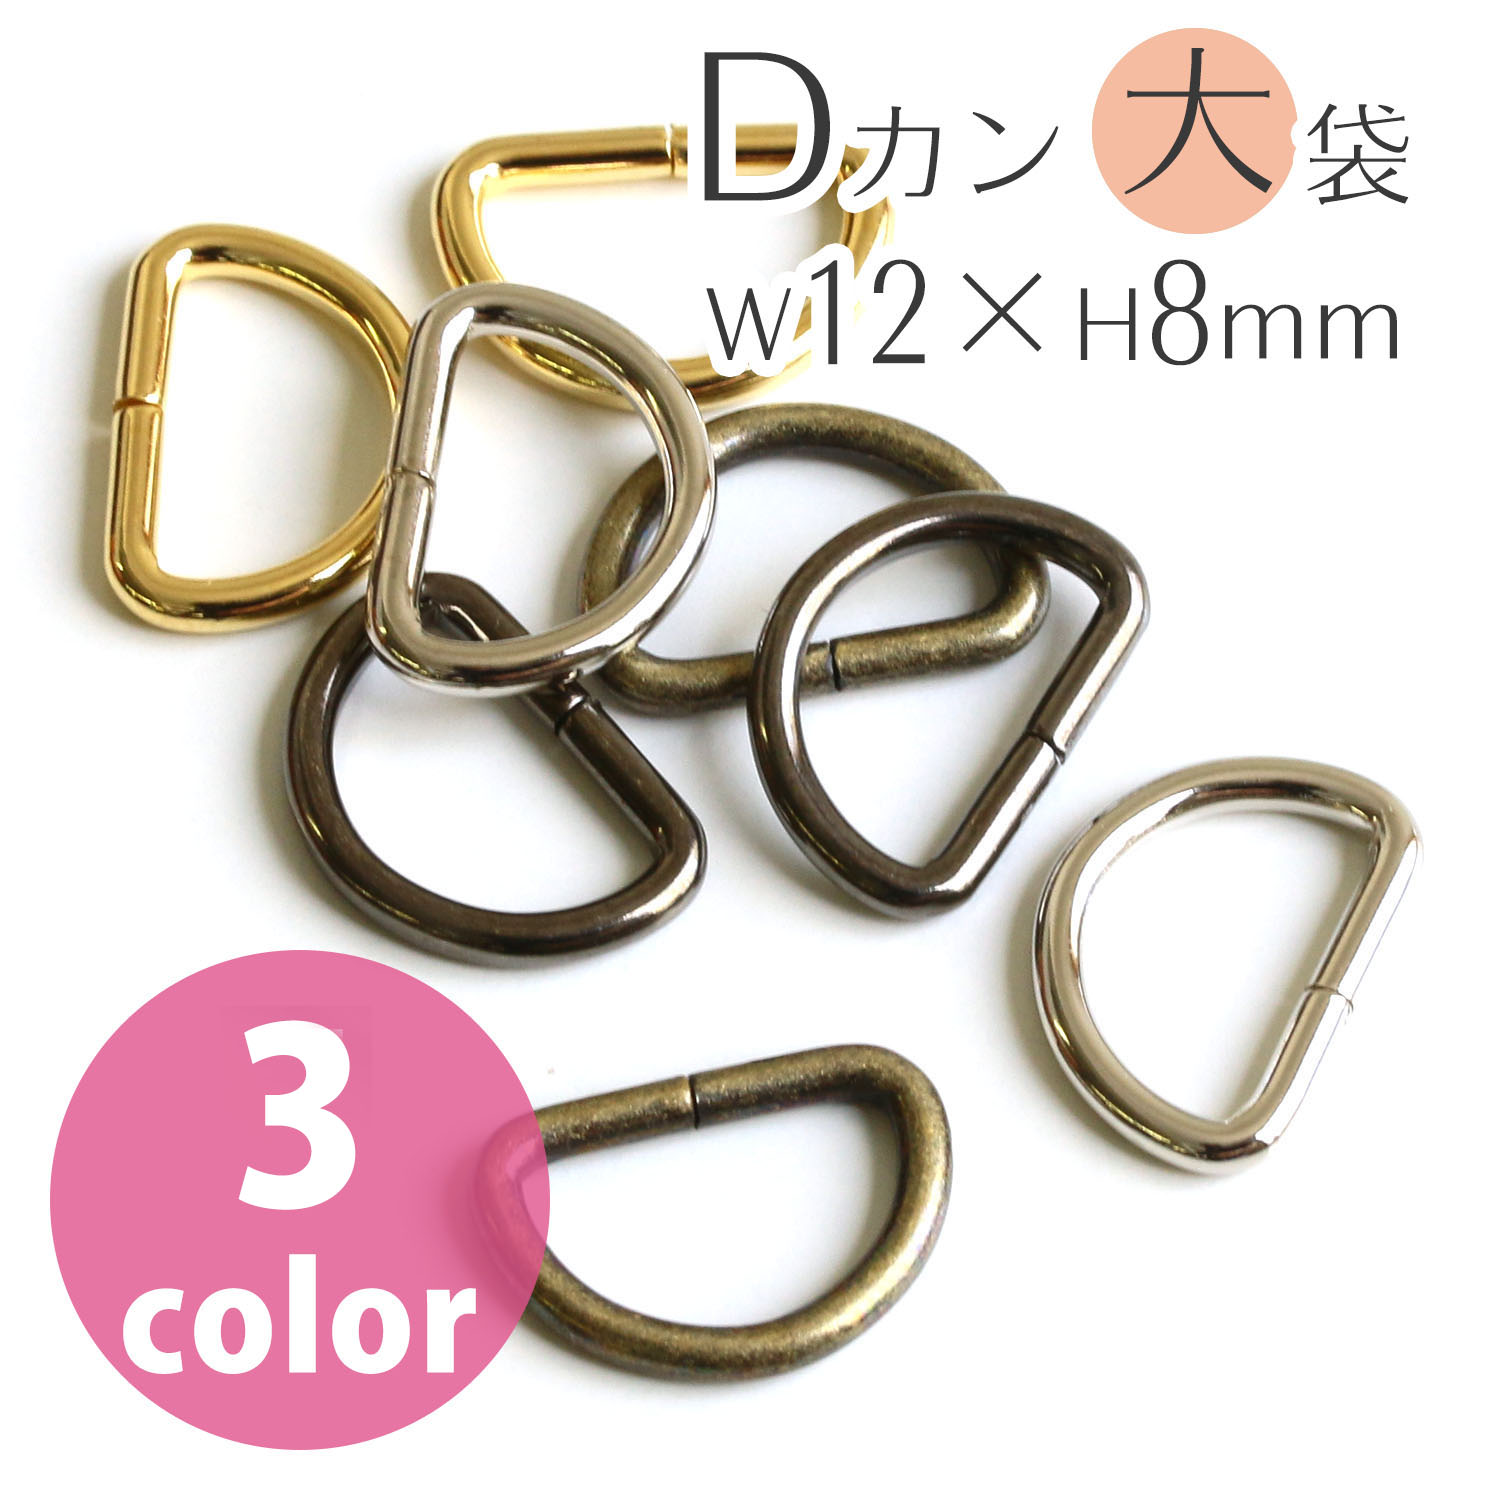 S22 D-Ring  12 x 8mm, diameter 2mm 120pcs  (bag)